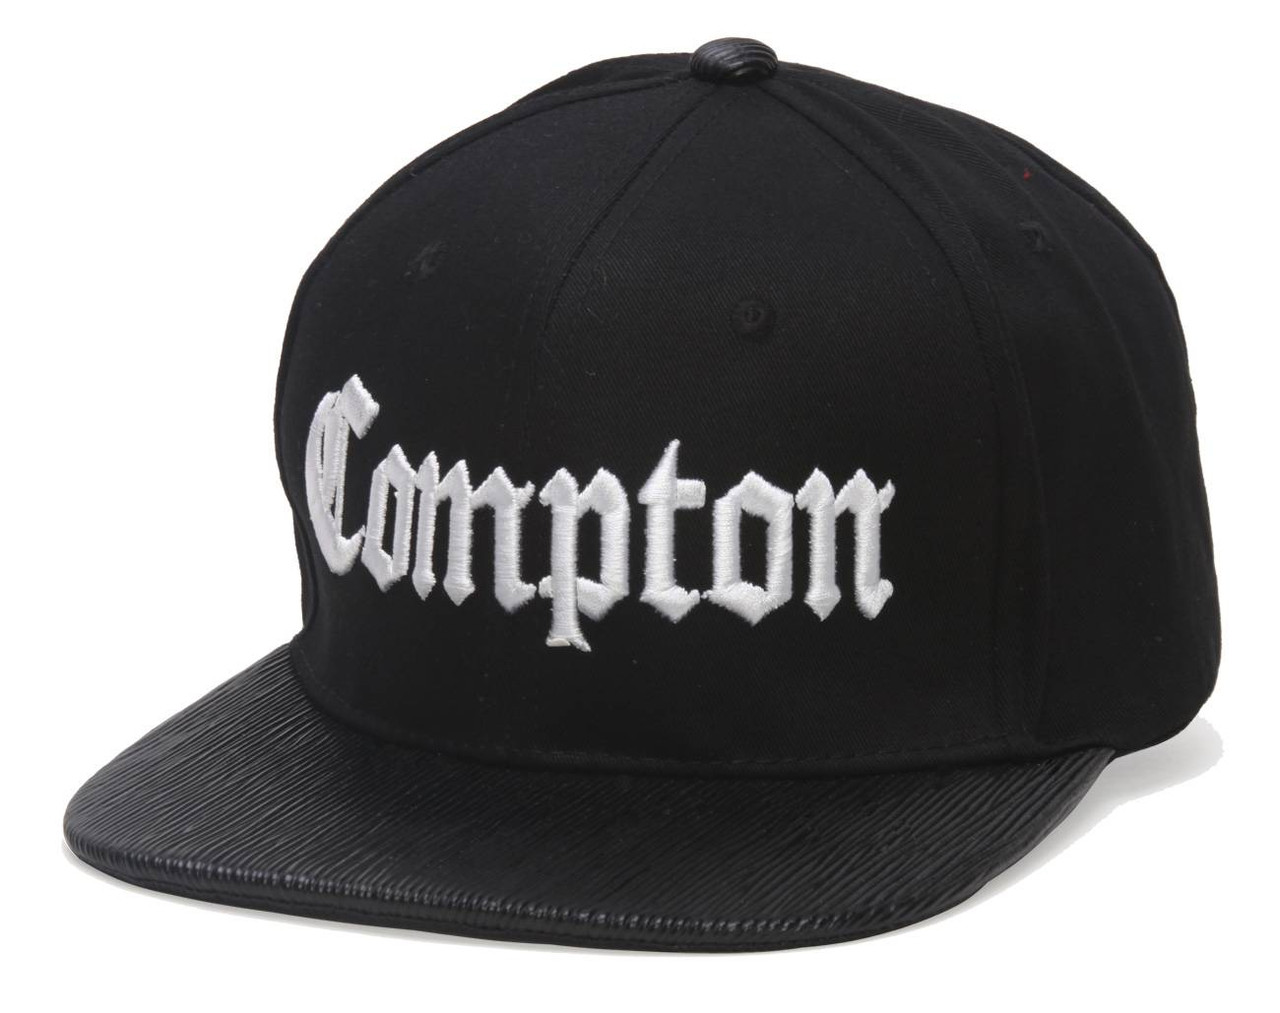 Black & White Compton Los Angeles Flat Bill Snapback Baseball Cap Caps Hat Hats 